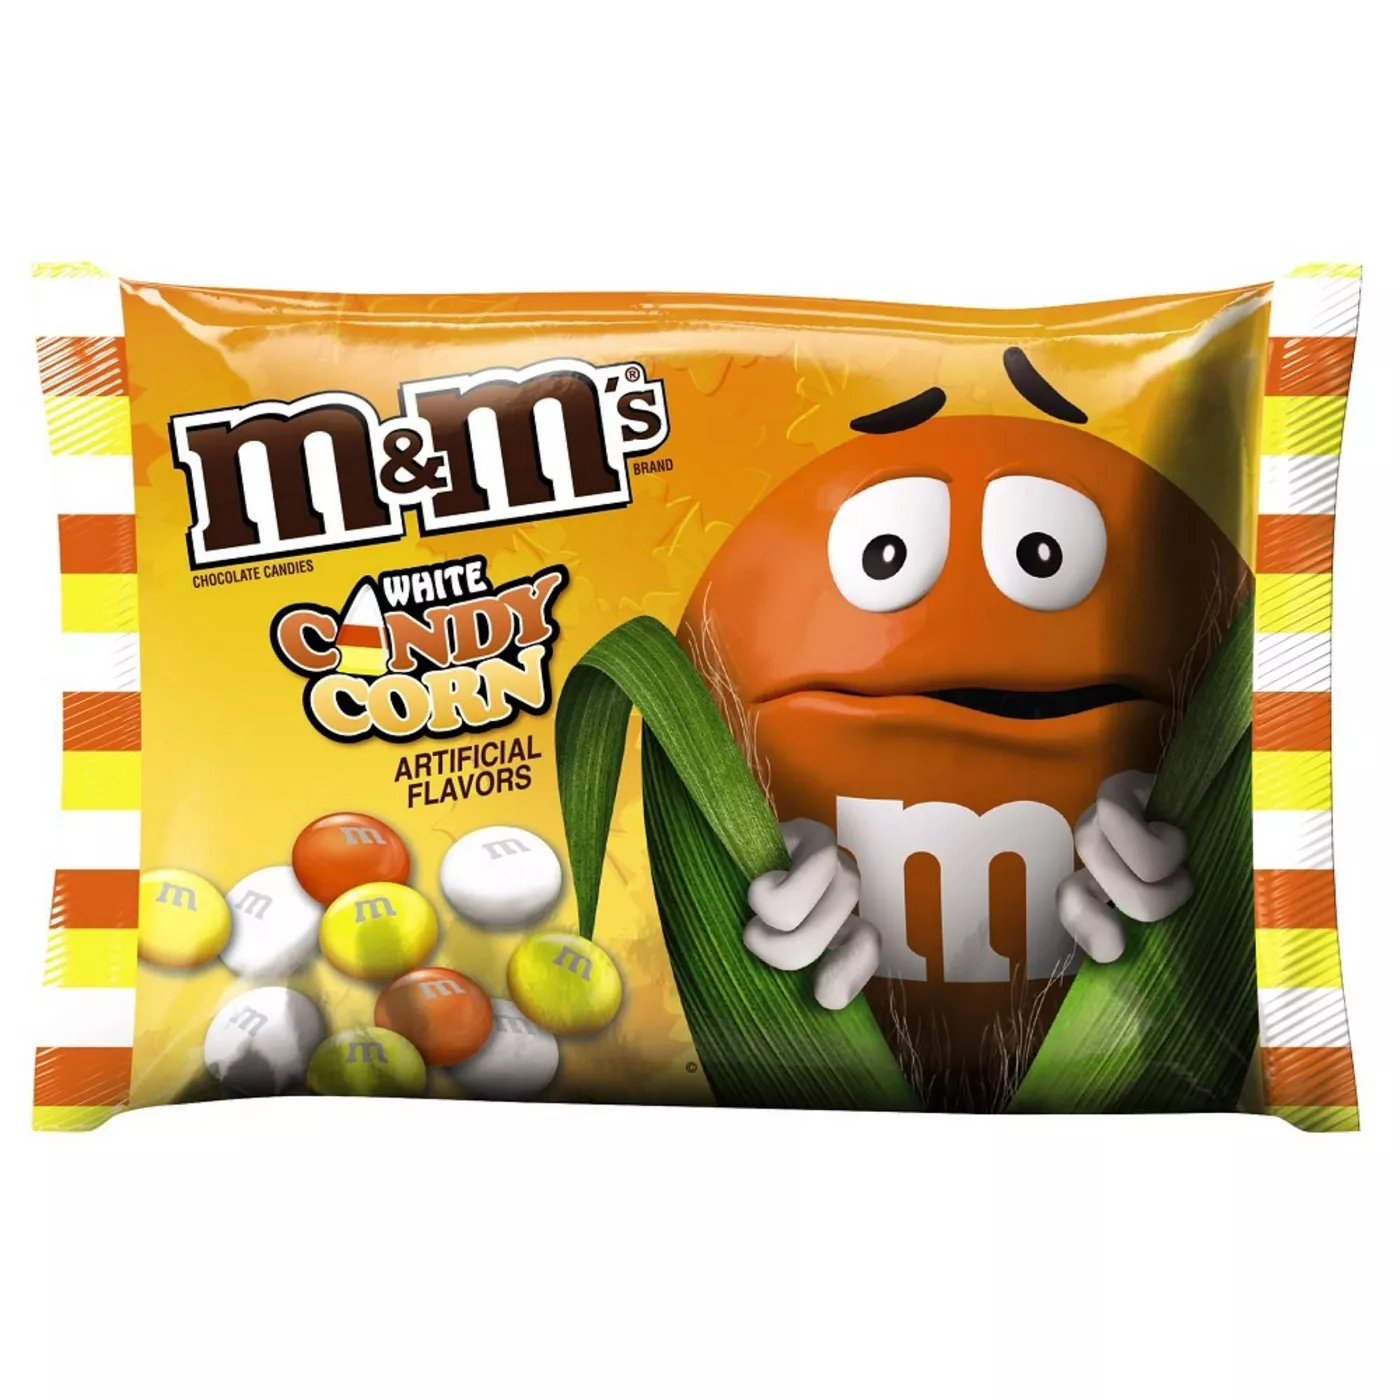 M&M's Halloween Candy Corn - 8oz - image 1 of 2